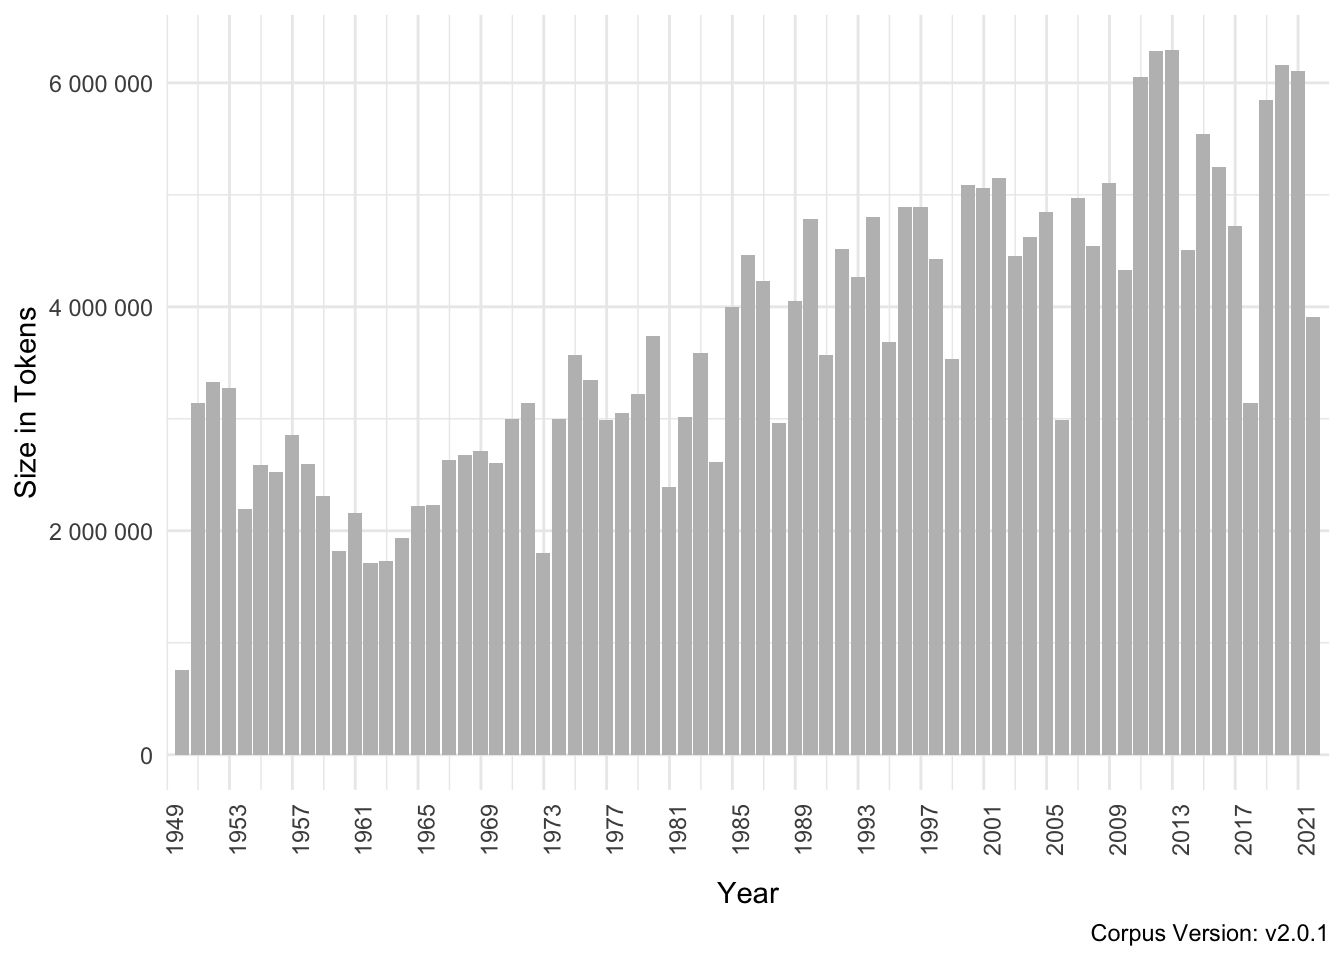 GermaParl Corpus - Tokens per Year